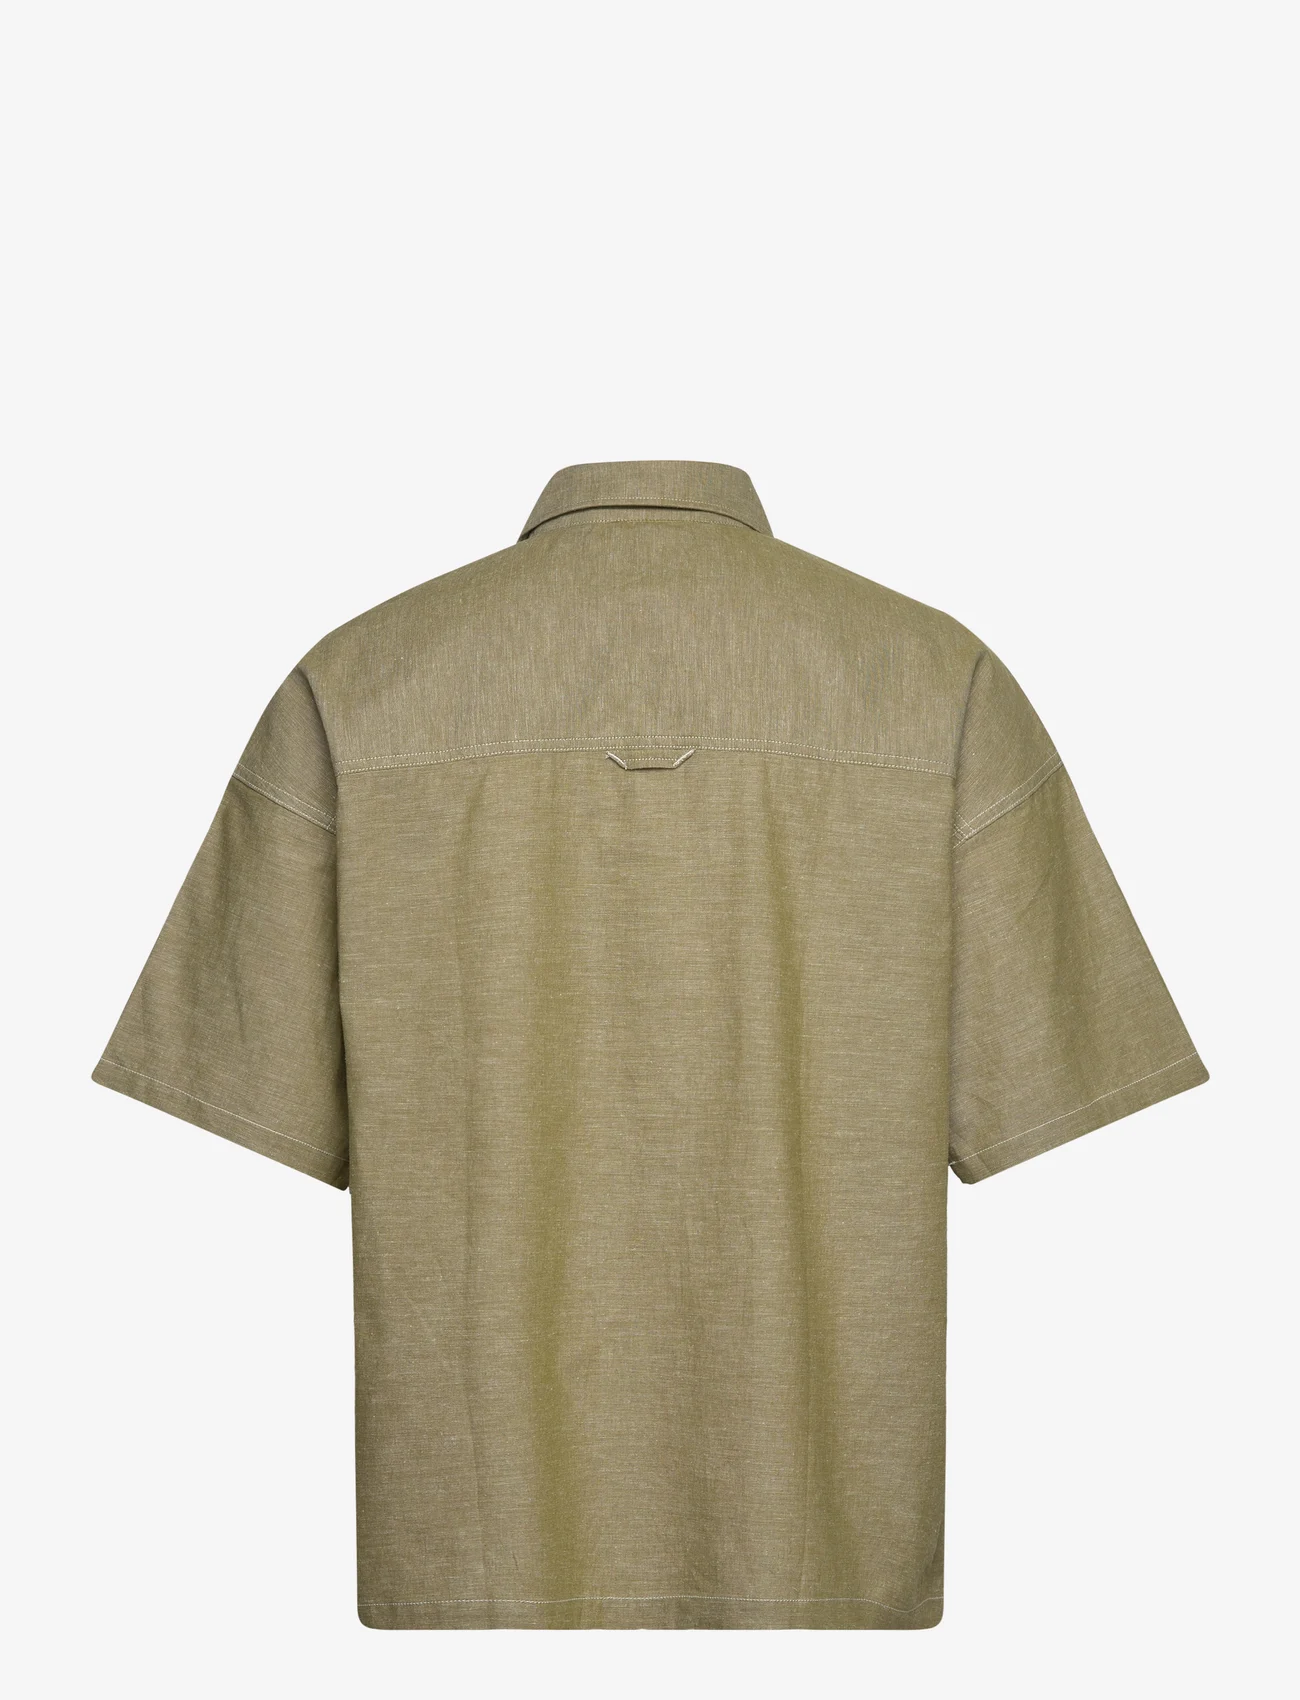 G-Star RAW - 1 pocket boxy shirt s\s - podstawowe koszulki - avocado/milk - 1